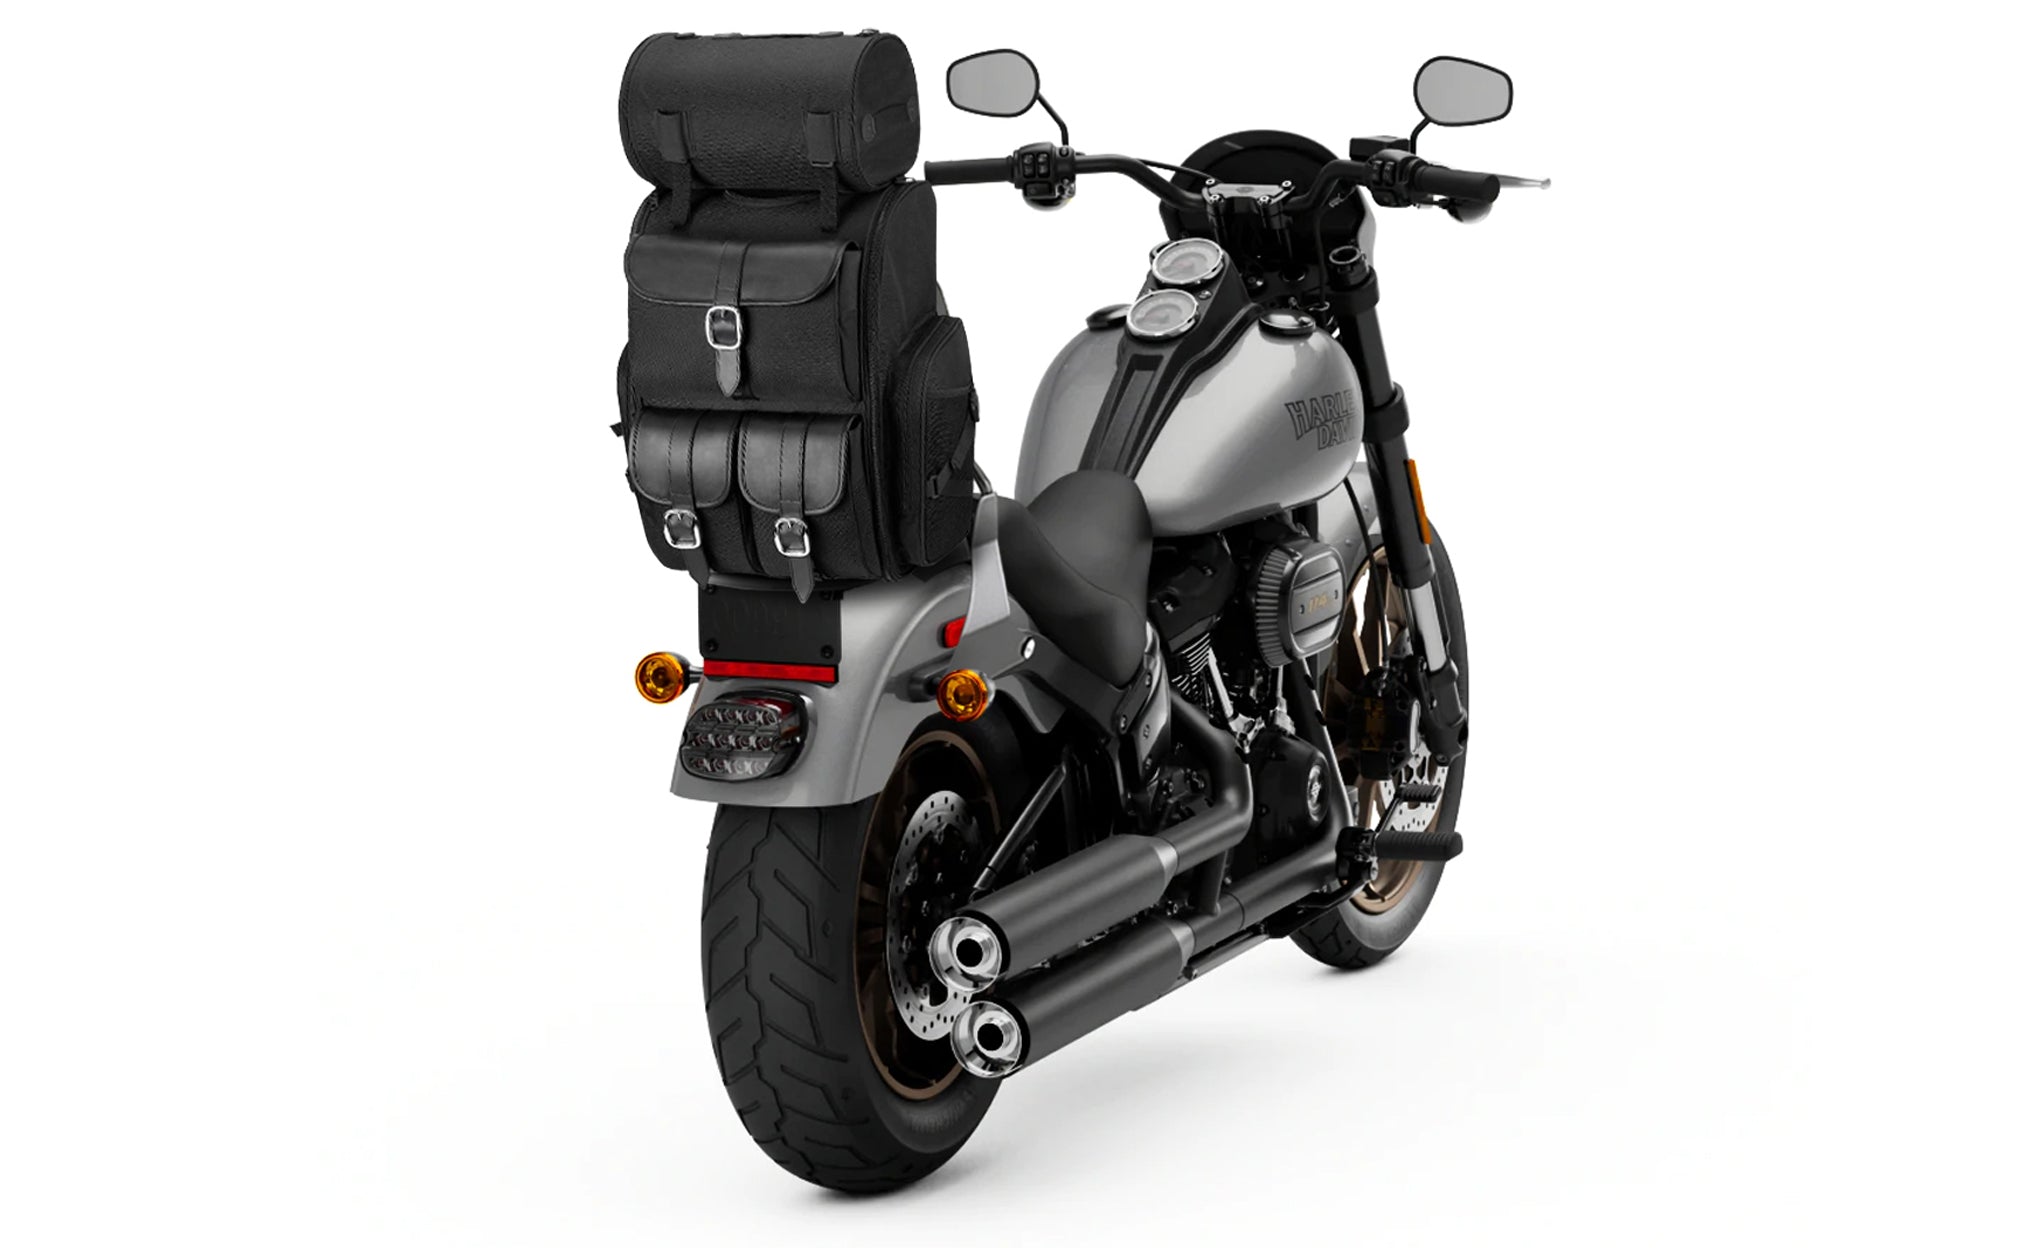 Viking Highway Extra Large Plain Kawasaki Motorcycle Sissy Bar Bag Bag on Bike View @expand